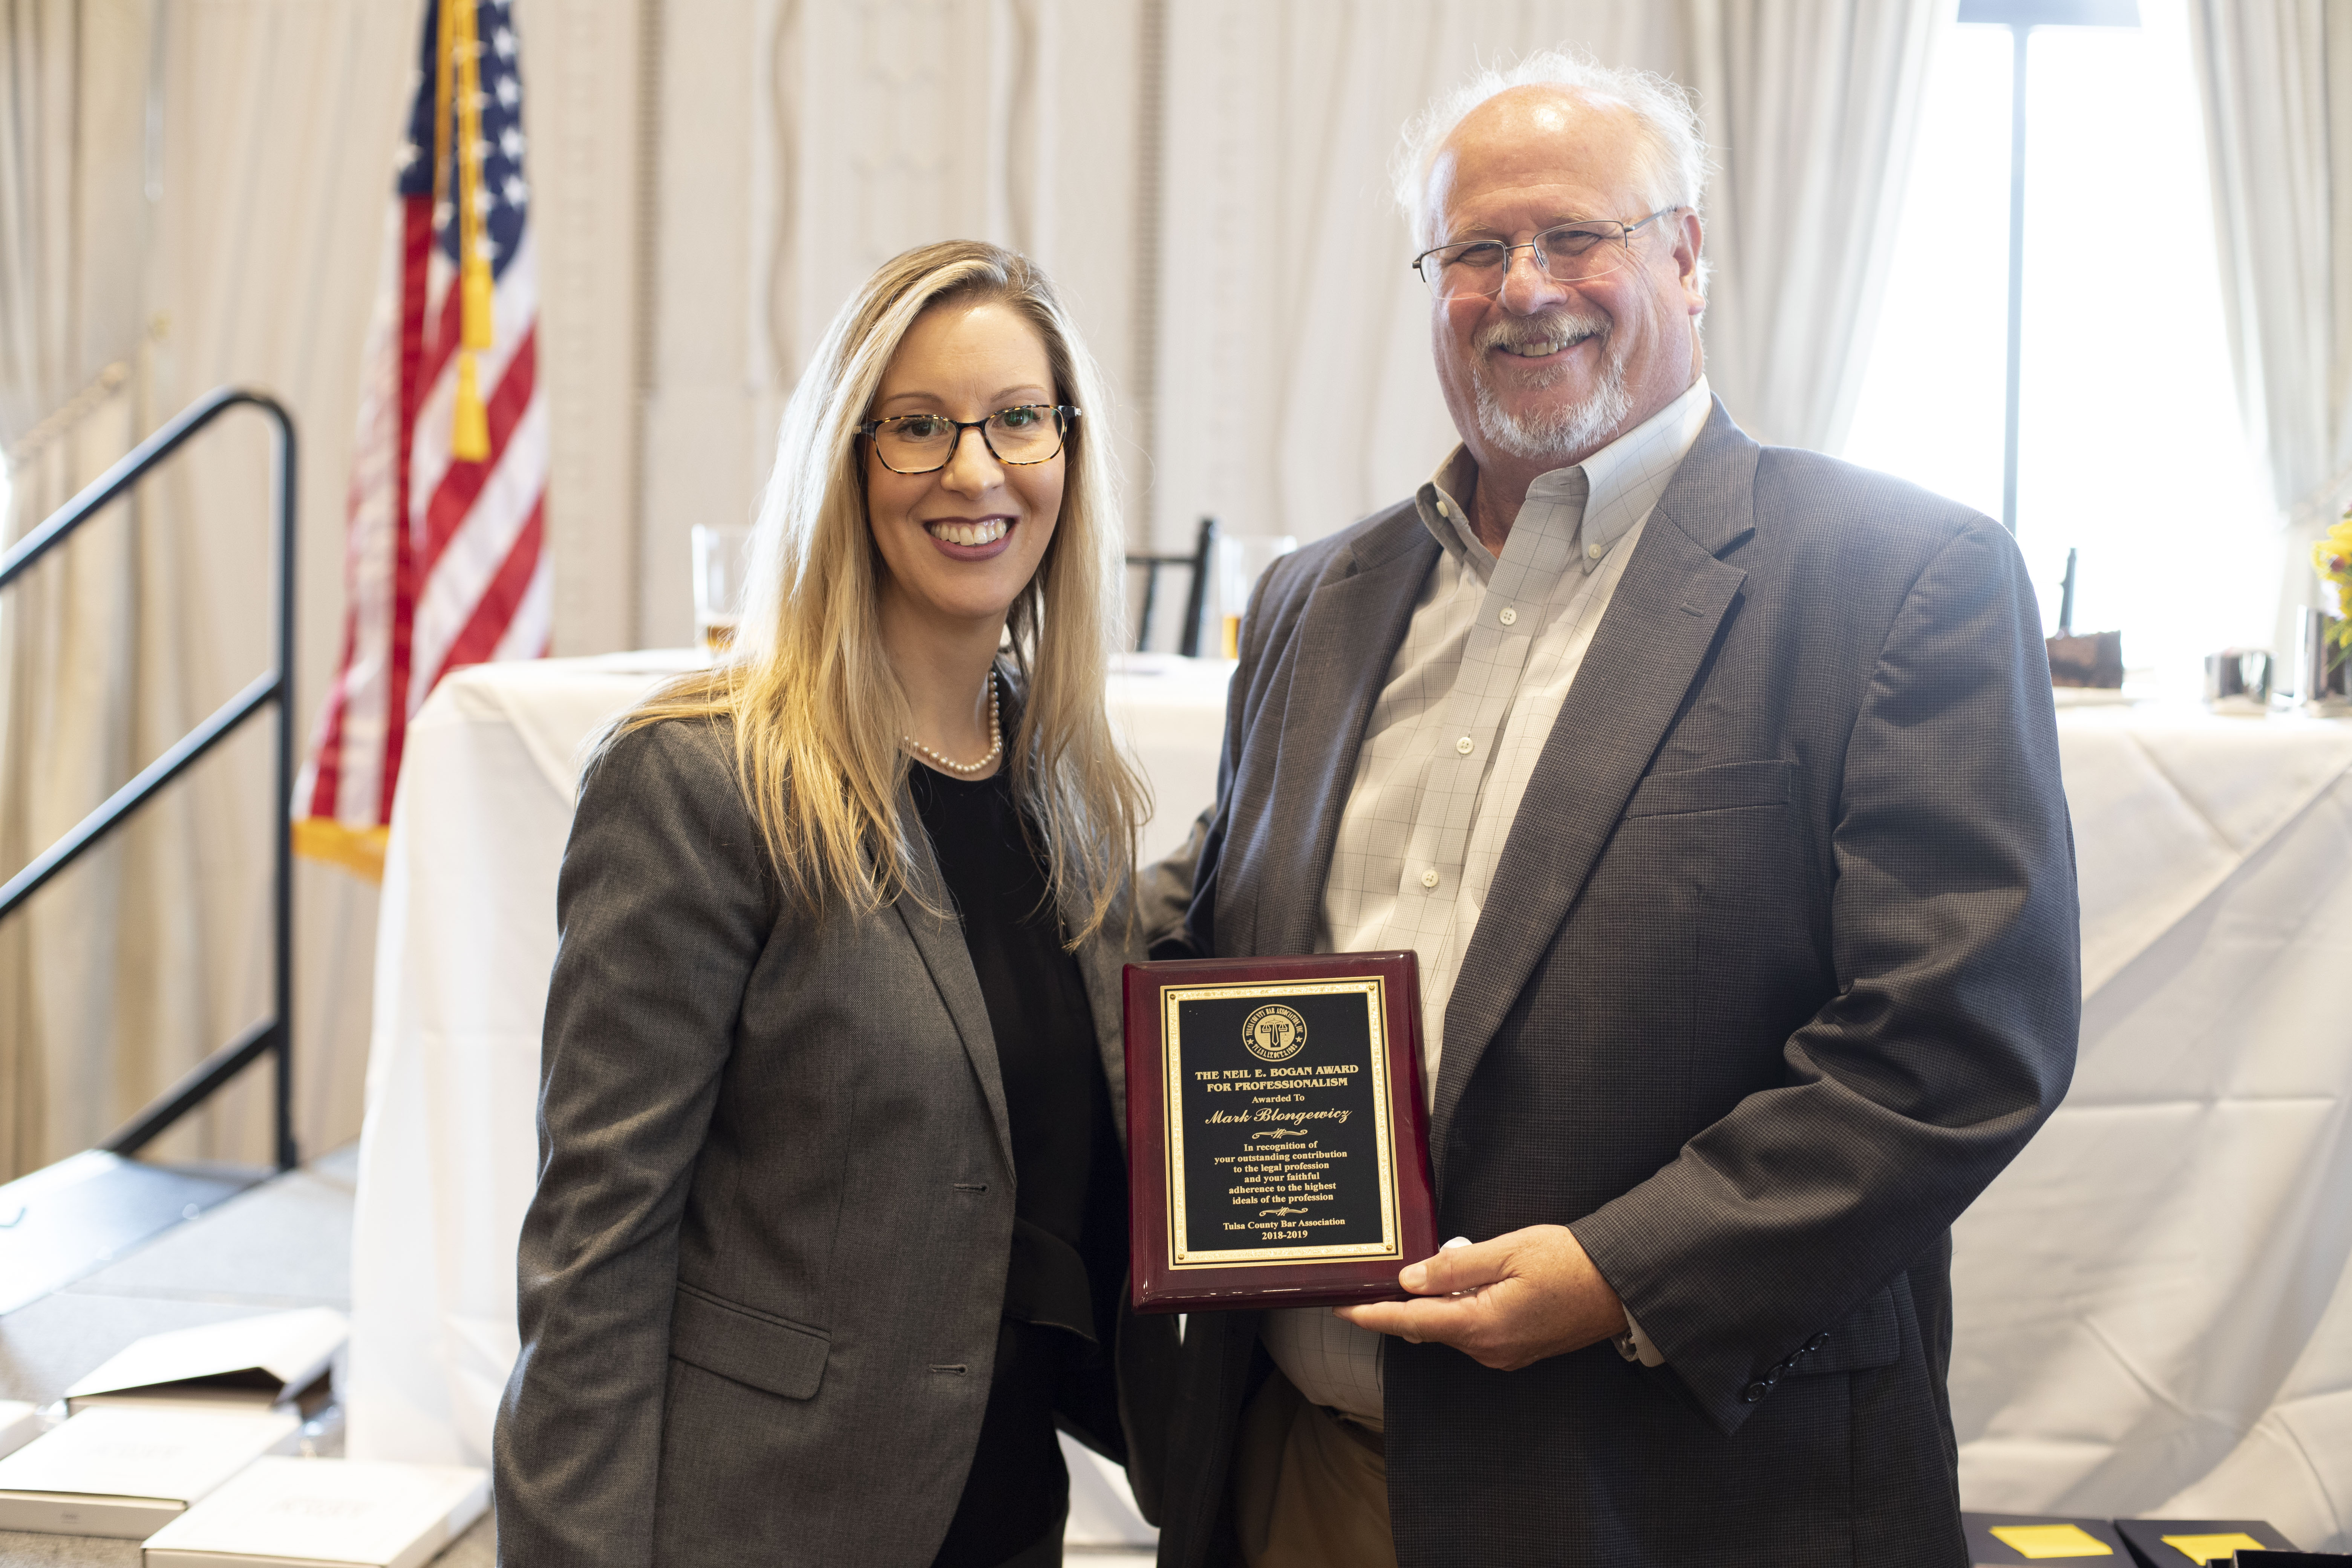 Outgoing TCBA President, Ann Keele, awarded Mark Blongewicz the TCBA Neil E. Bogan Award